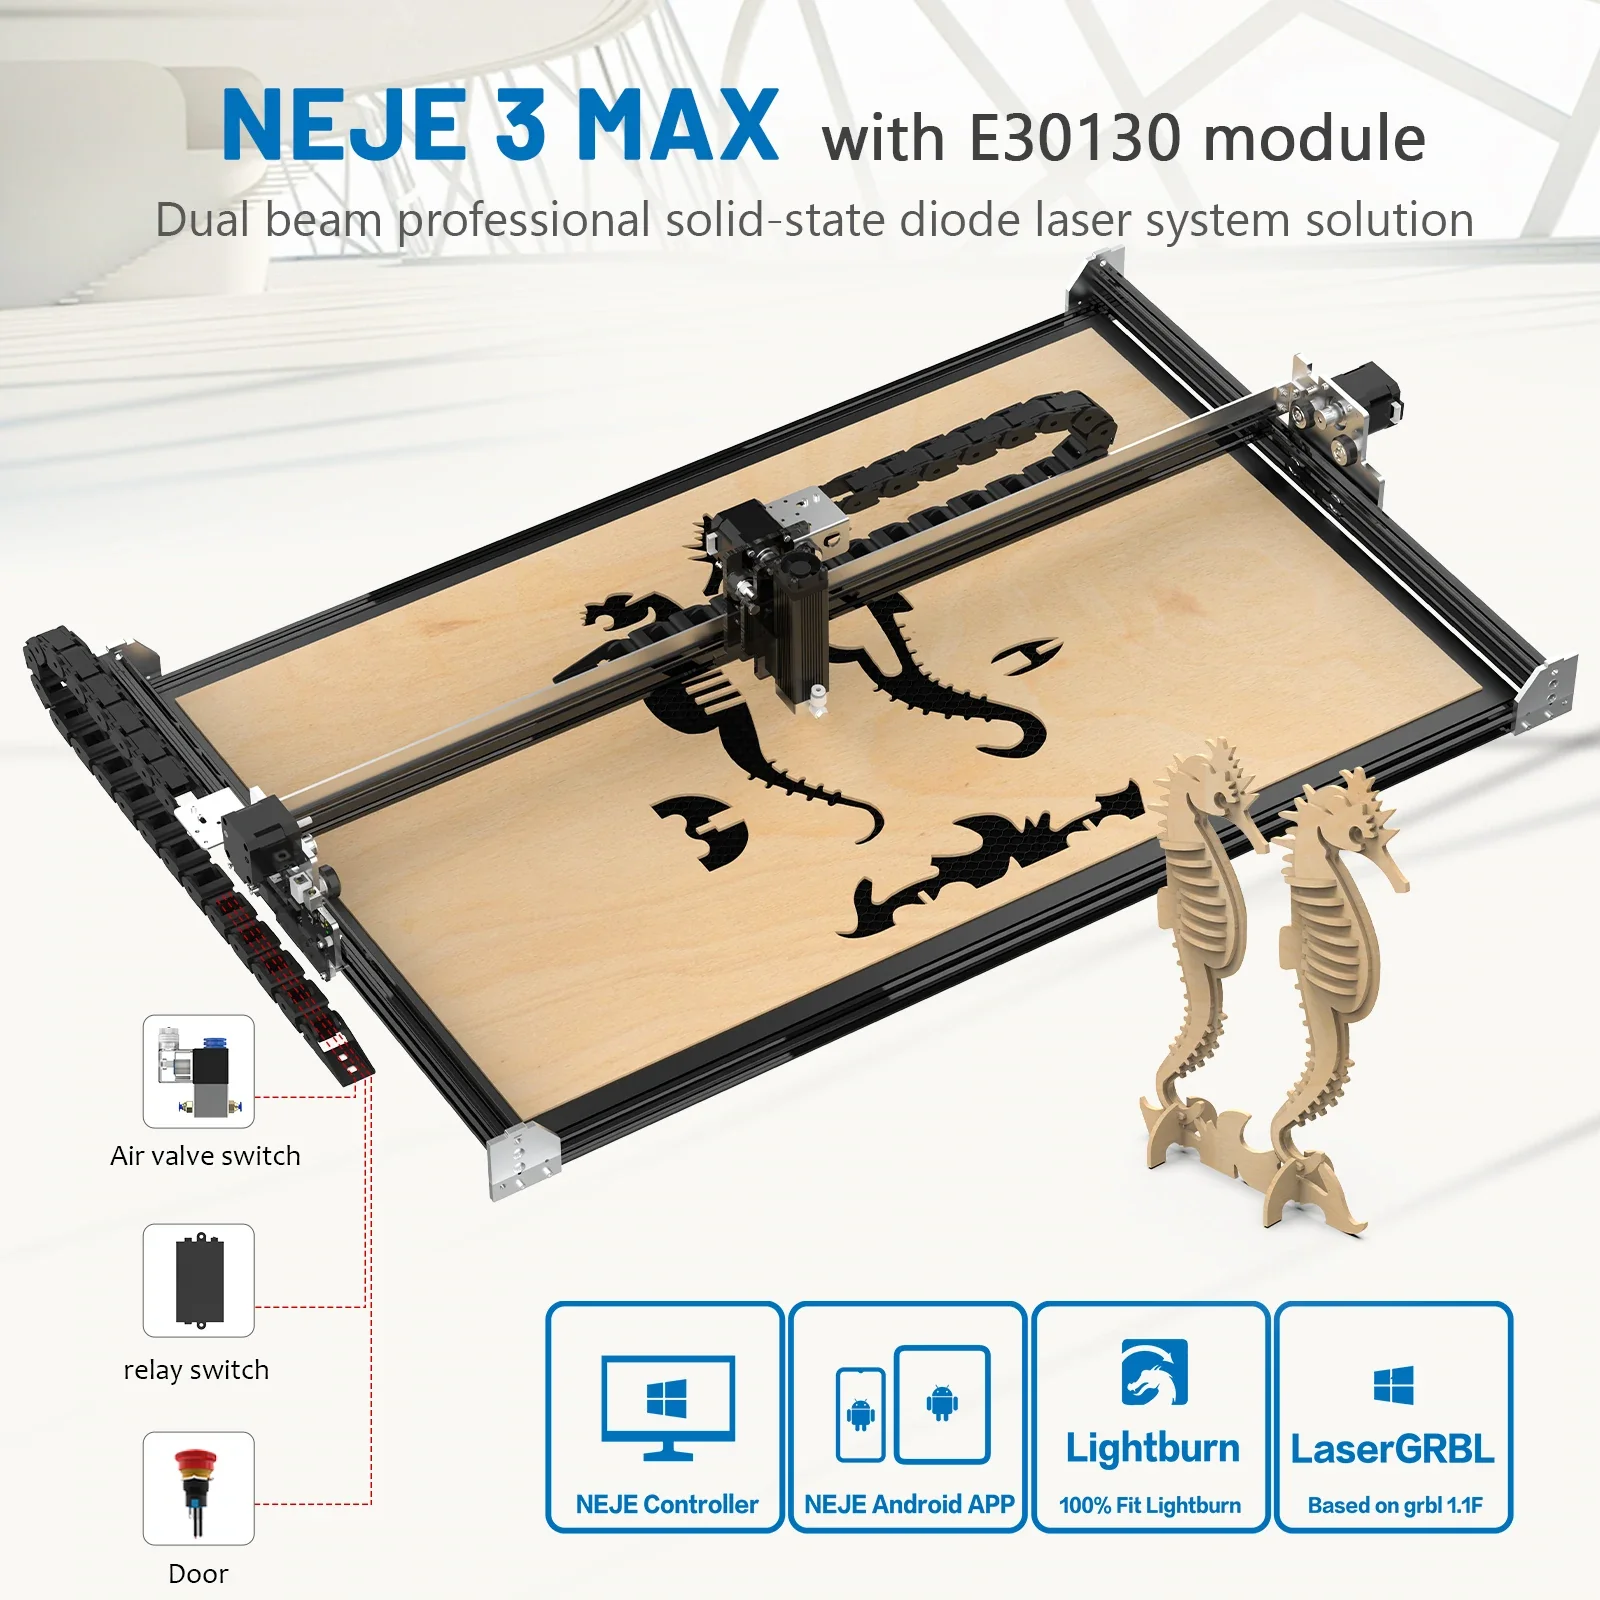 

NEJE 3 Max 40w 81x46cm DIODE Laser Engraver Desktop CNC DIY 3D Engraving Carving Cutting Machine for Stainless Steel Metal Wood